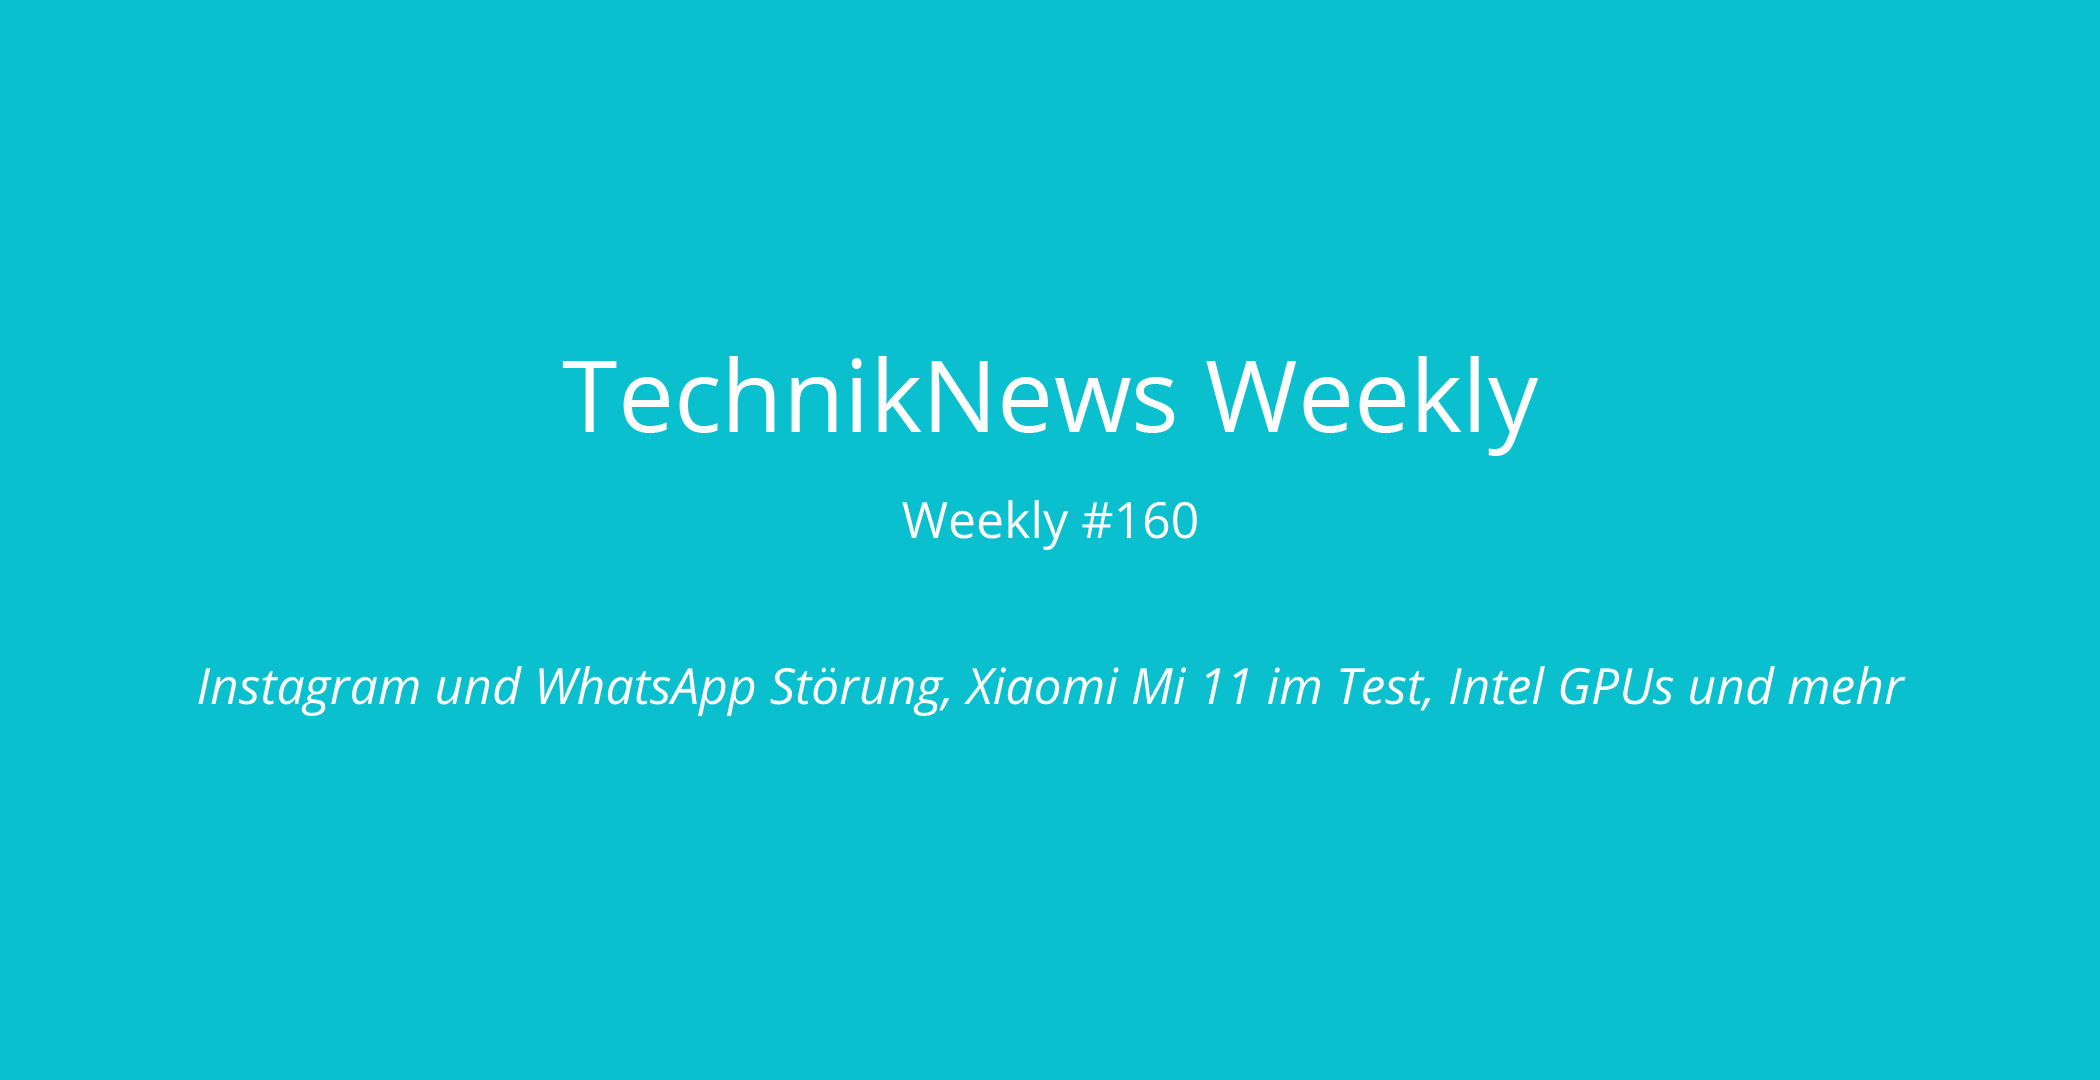 TechnikNews Weekly # 160